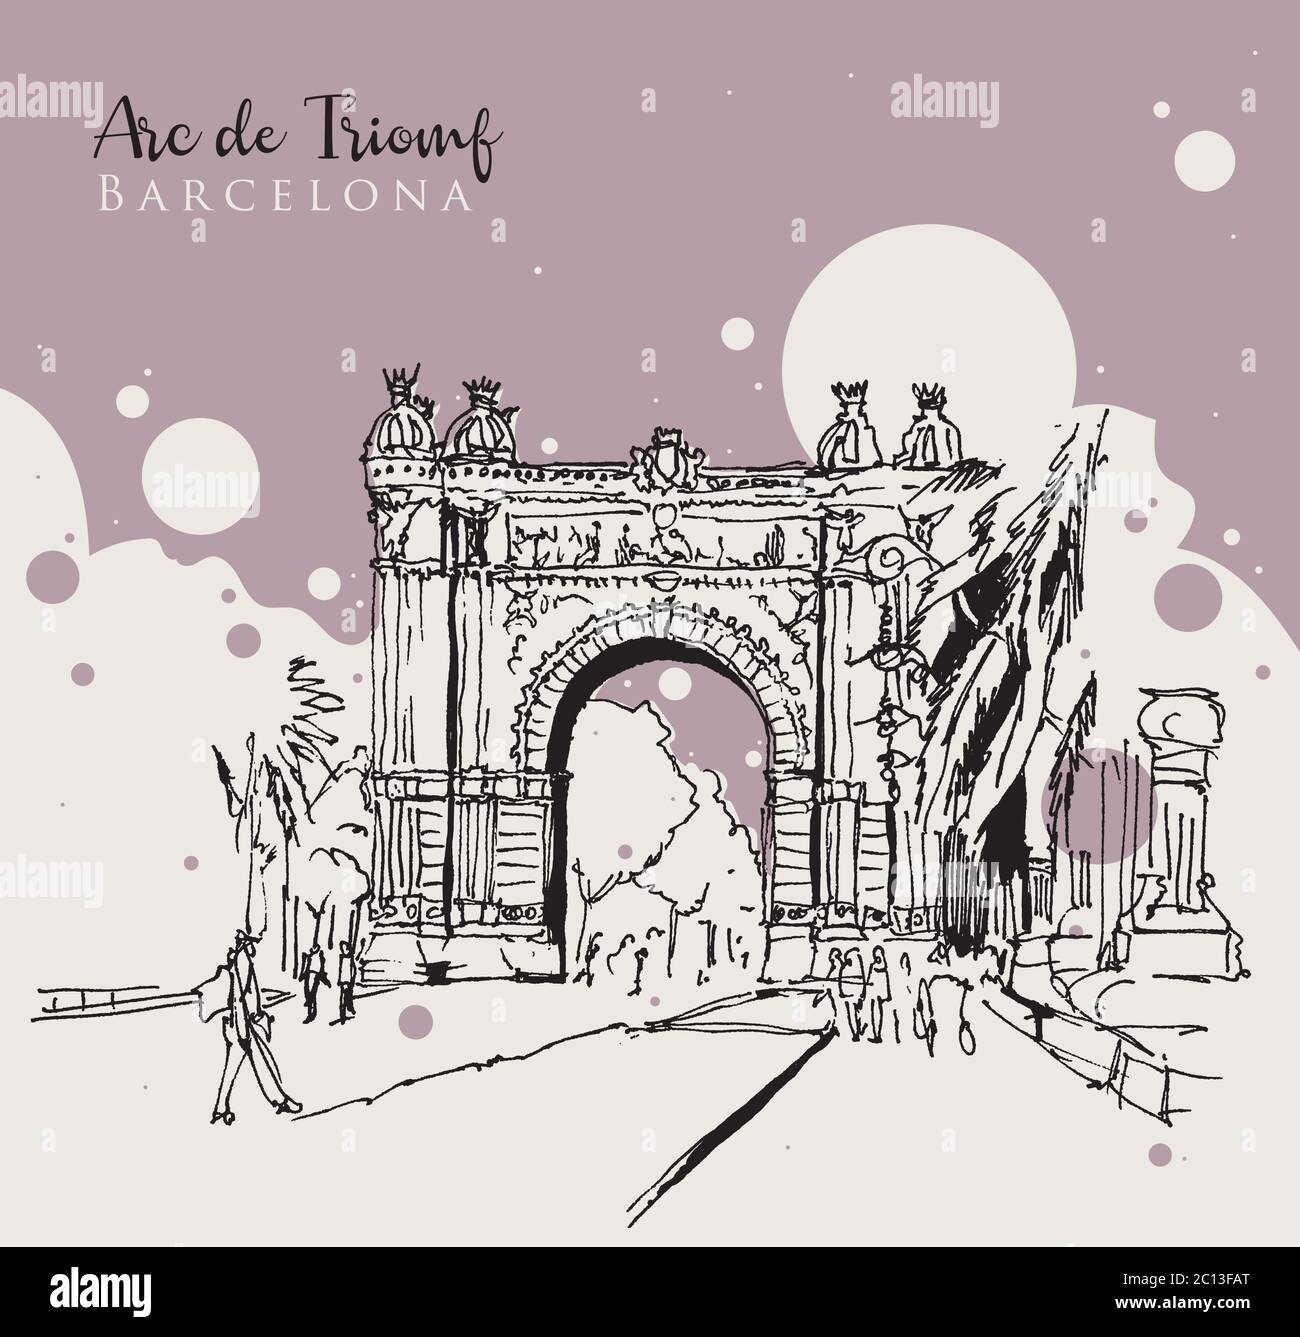 Drawing sketch illustration of the Arc de Triomf in Barcelona, Spain Stock Vector